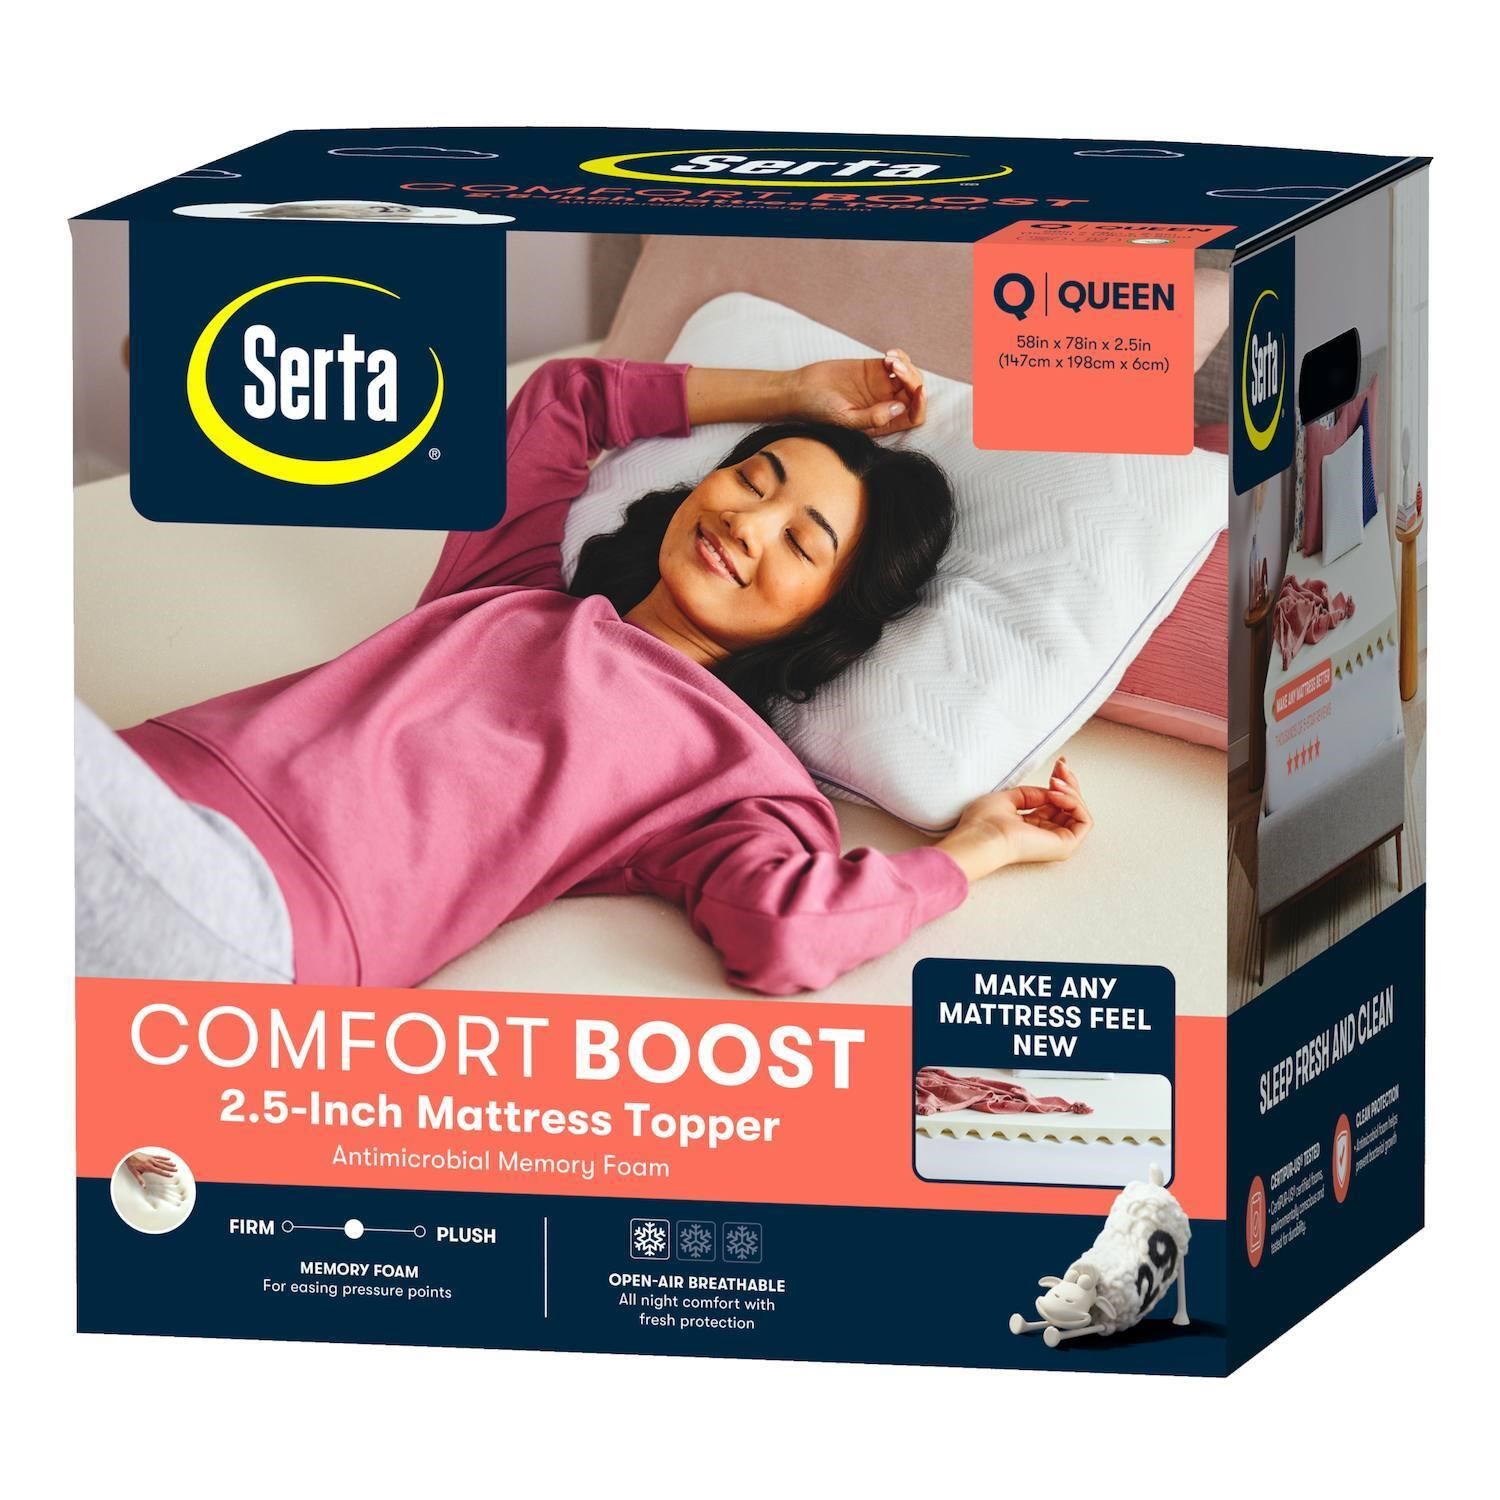 $270  Serta Comfort Boost 2.5-Inch Memory Foam Mat